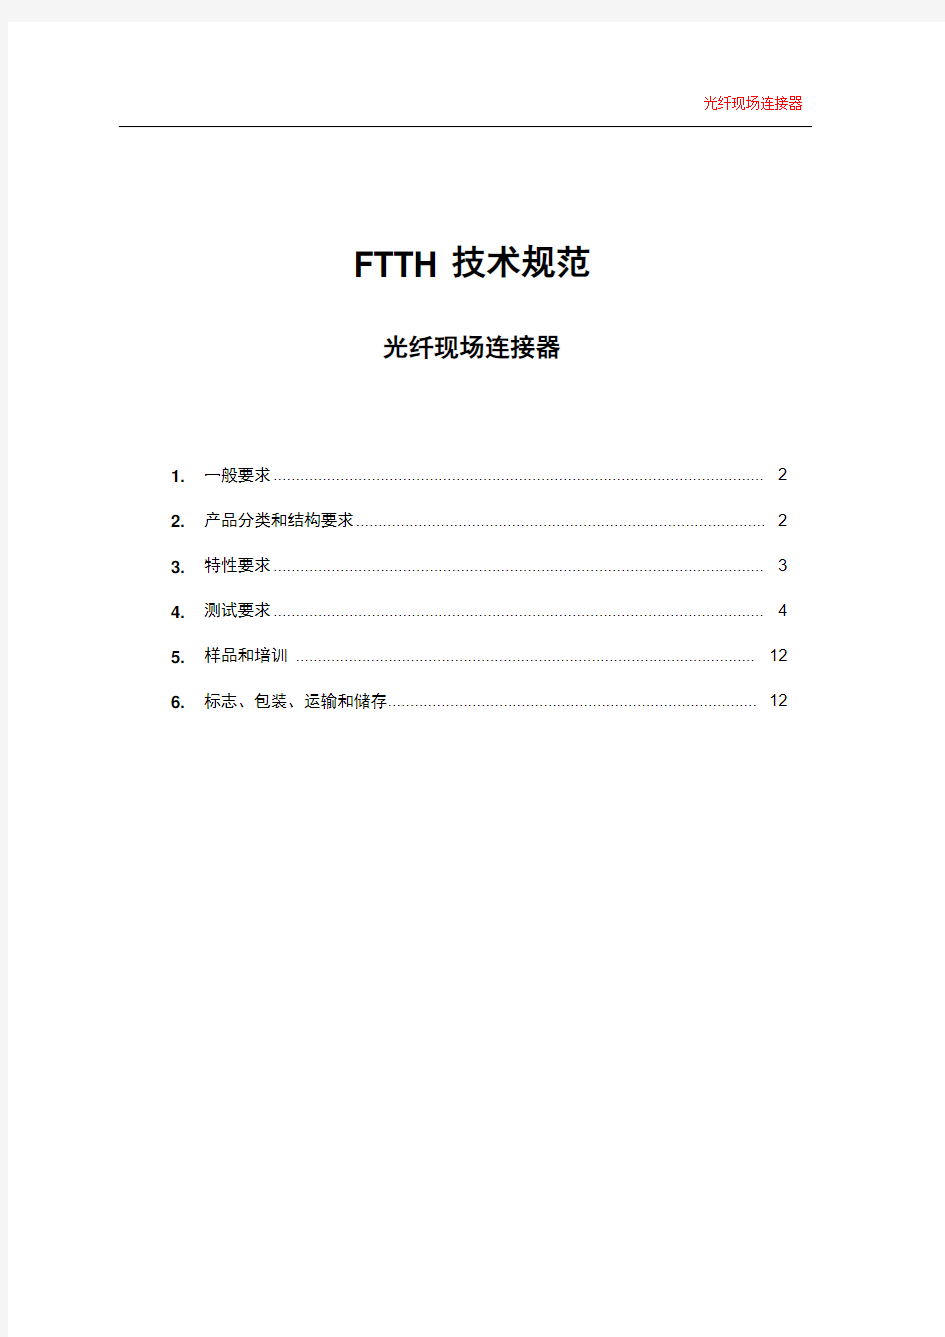 FTTH技术规范-光纤现场连接器_V0610(1)